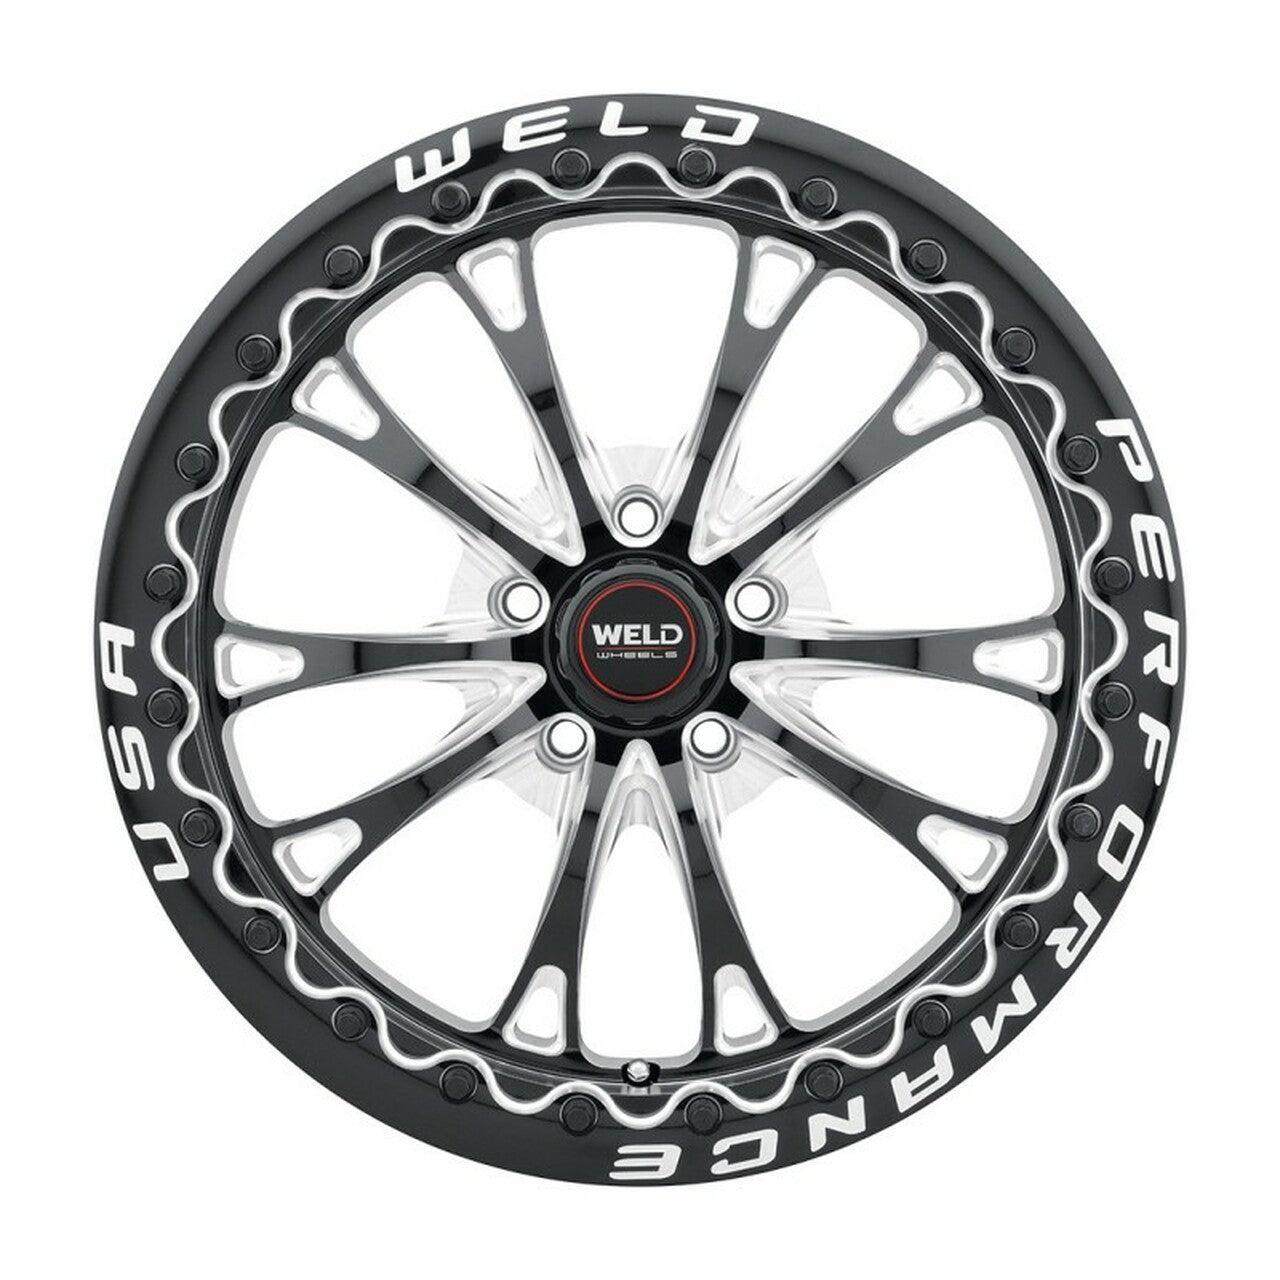 WELD Belmont Beadlock Drag Gloss Black Wheel with Milled Spokes 17x10 | 5x127 BC (5x5) | +38 Offset | 7.00 Backspacing - S90870075P38